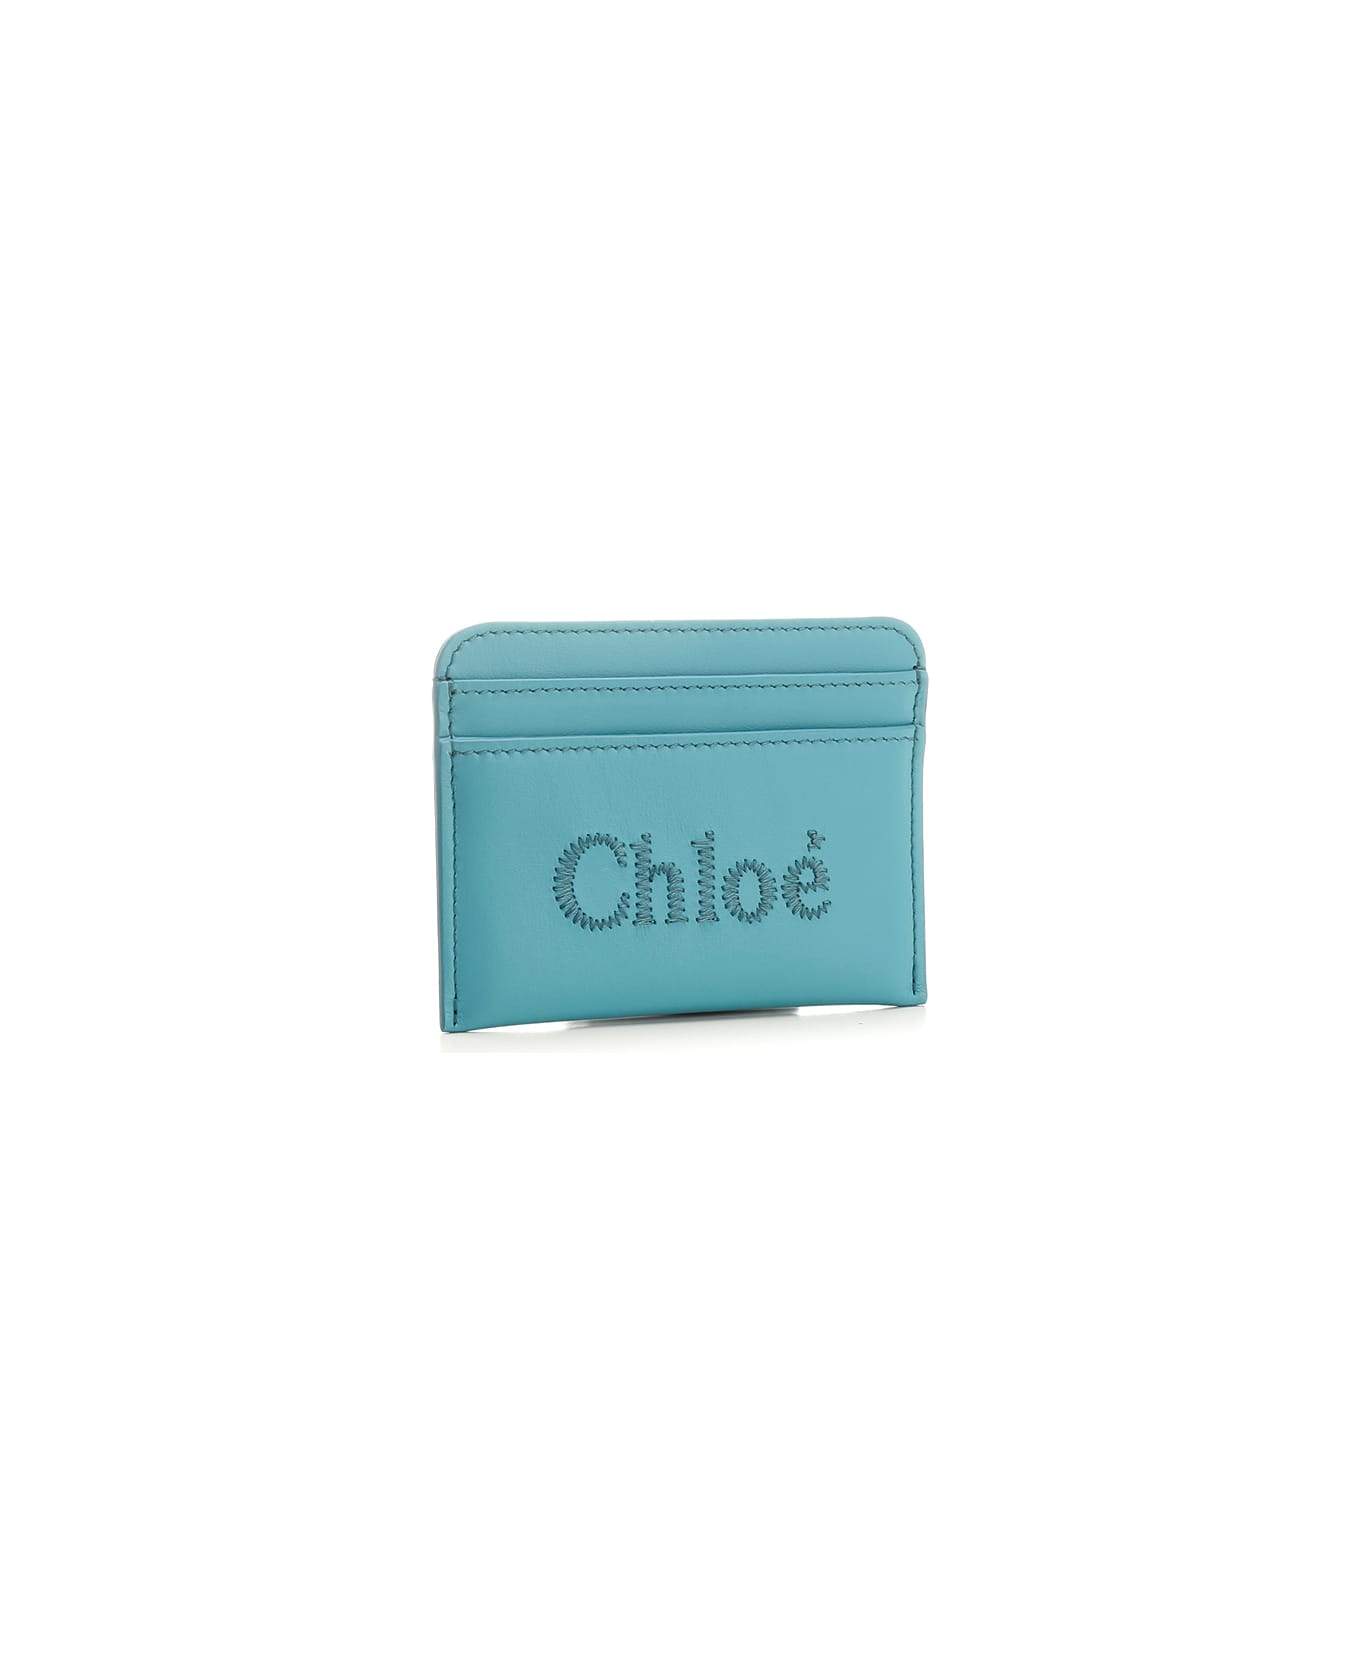 Chloé 'sense' Card Holder - Light blue